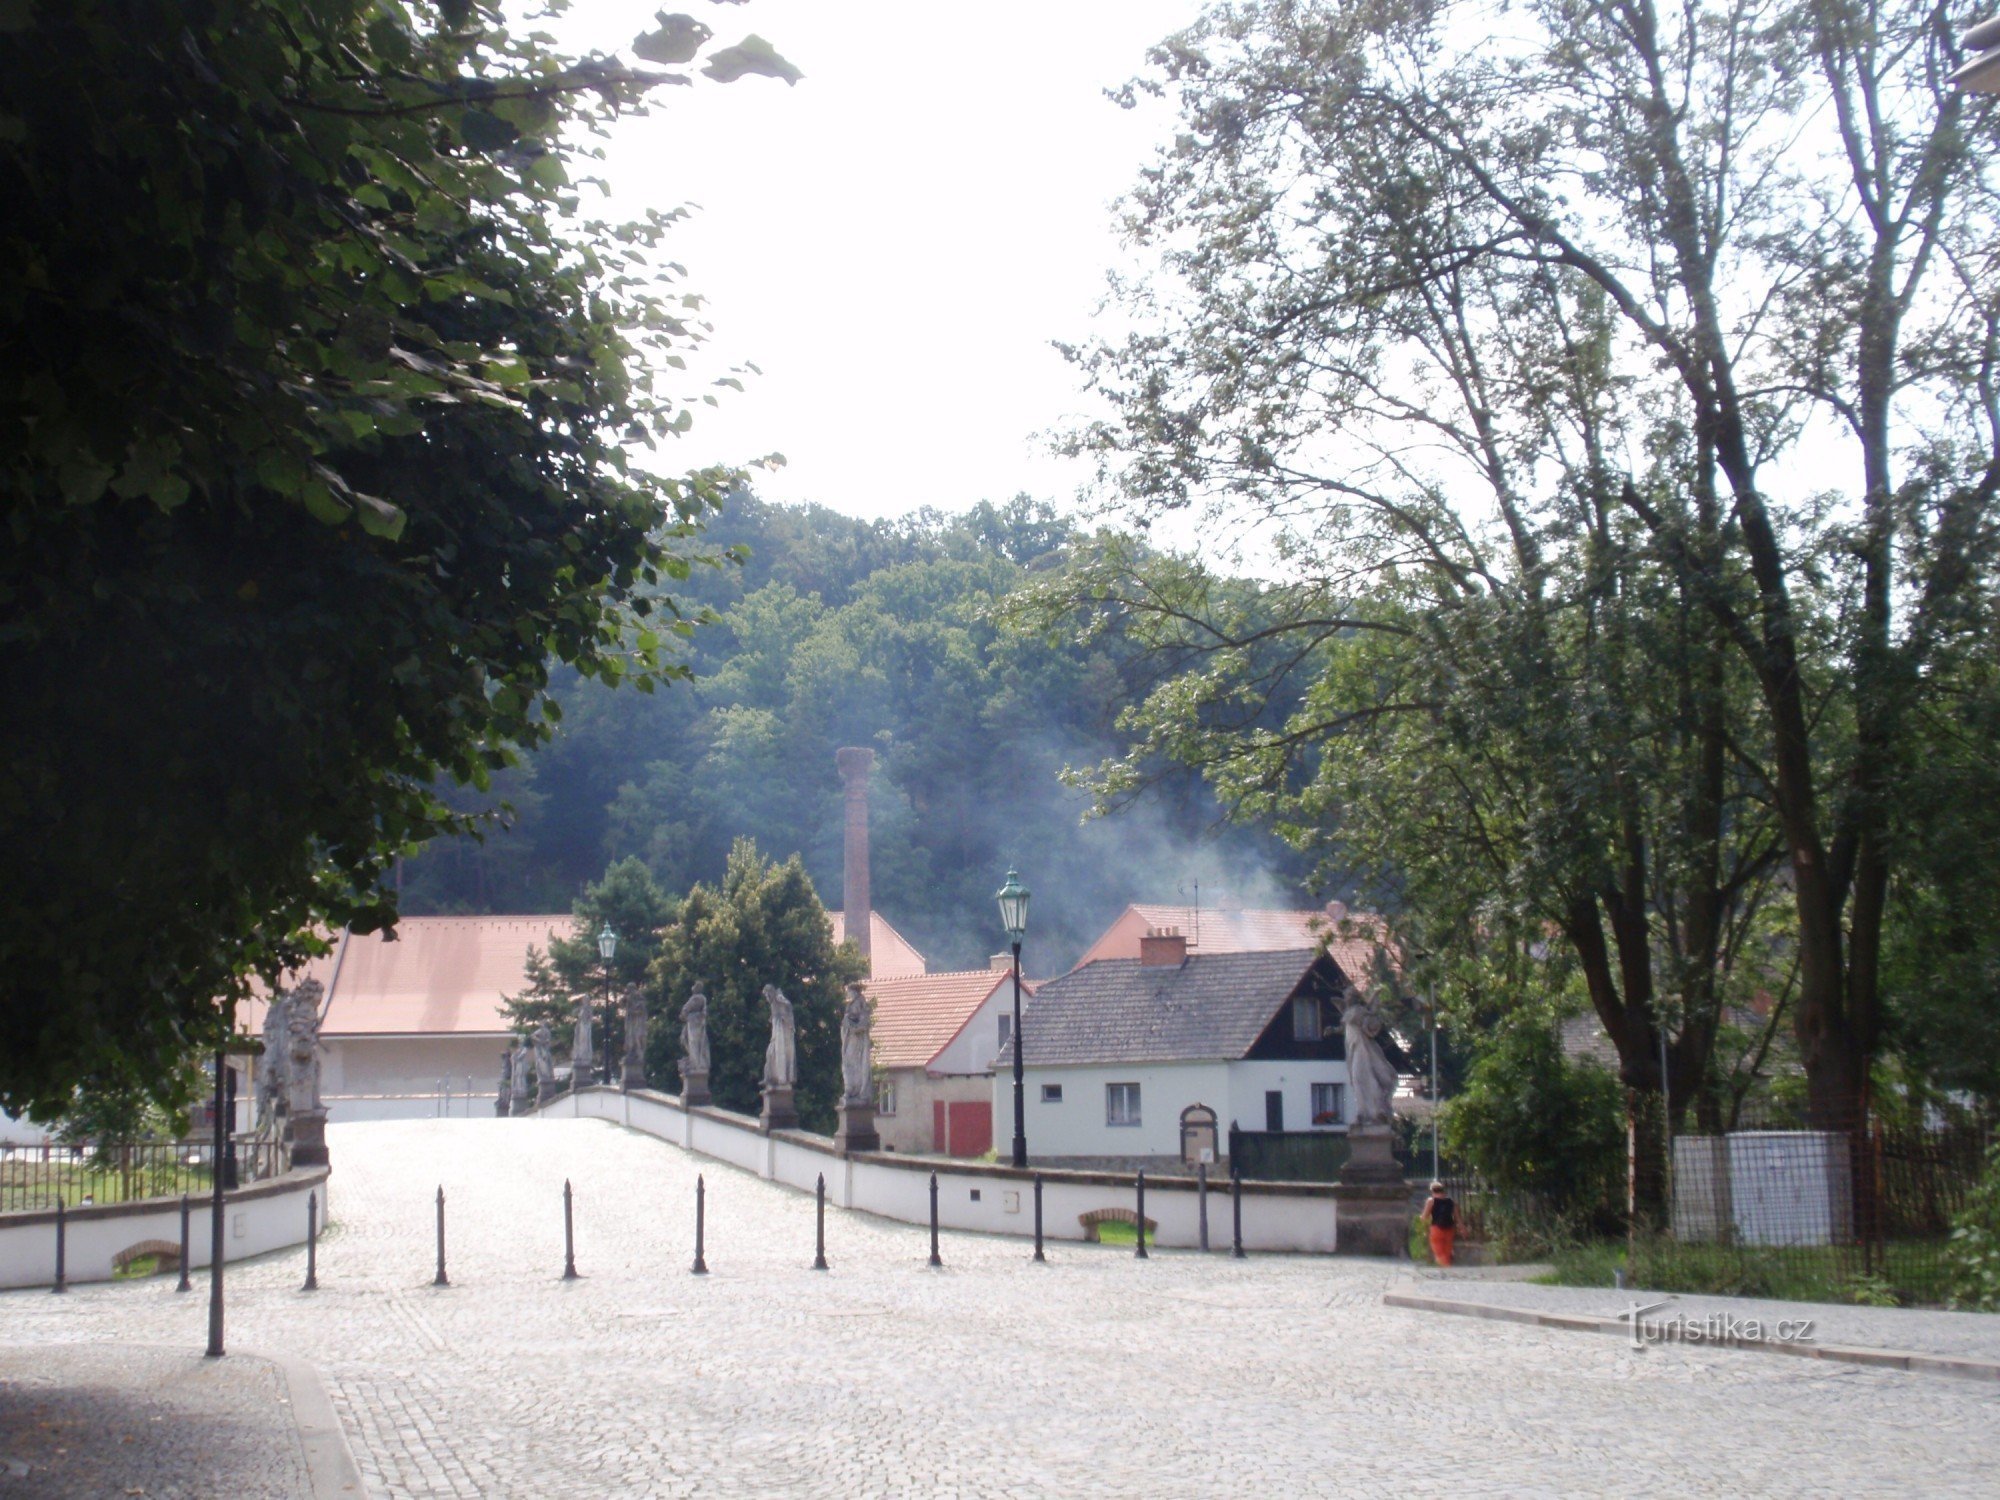 A small circuit around Náměšti nad Oslavou